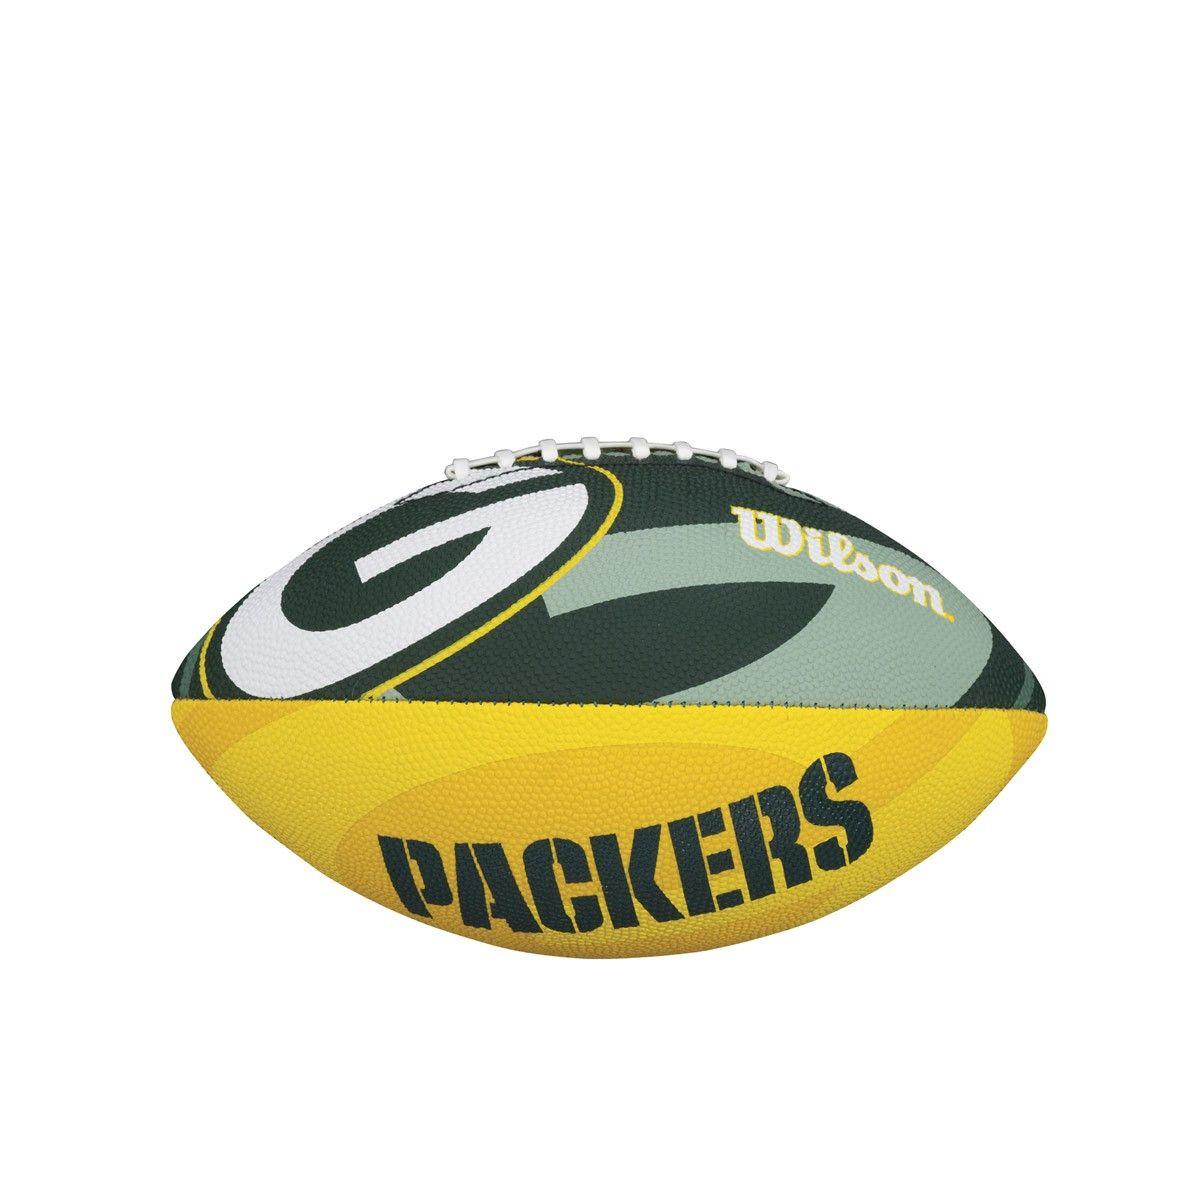 NFL Packers Logo - NFL TEAM LOGO JUNIOR SIZE FOOTBALL - GREEN BAY PACKERS | Wilson ...